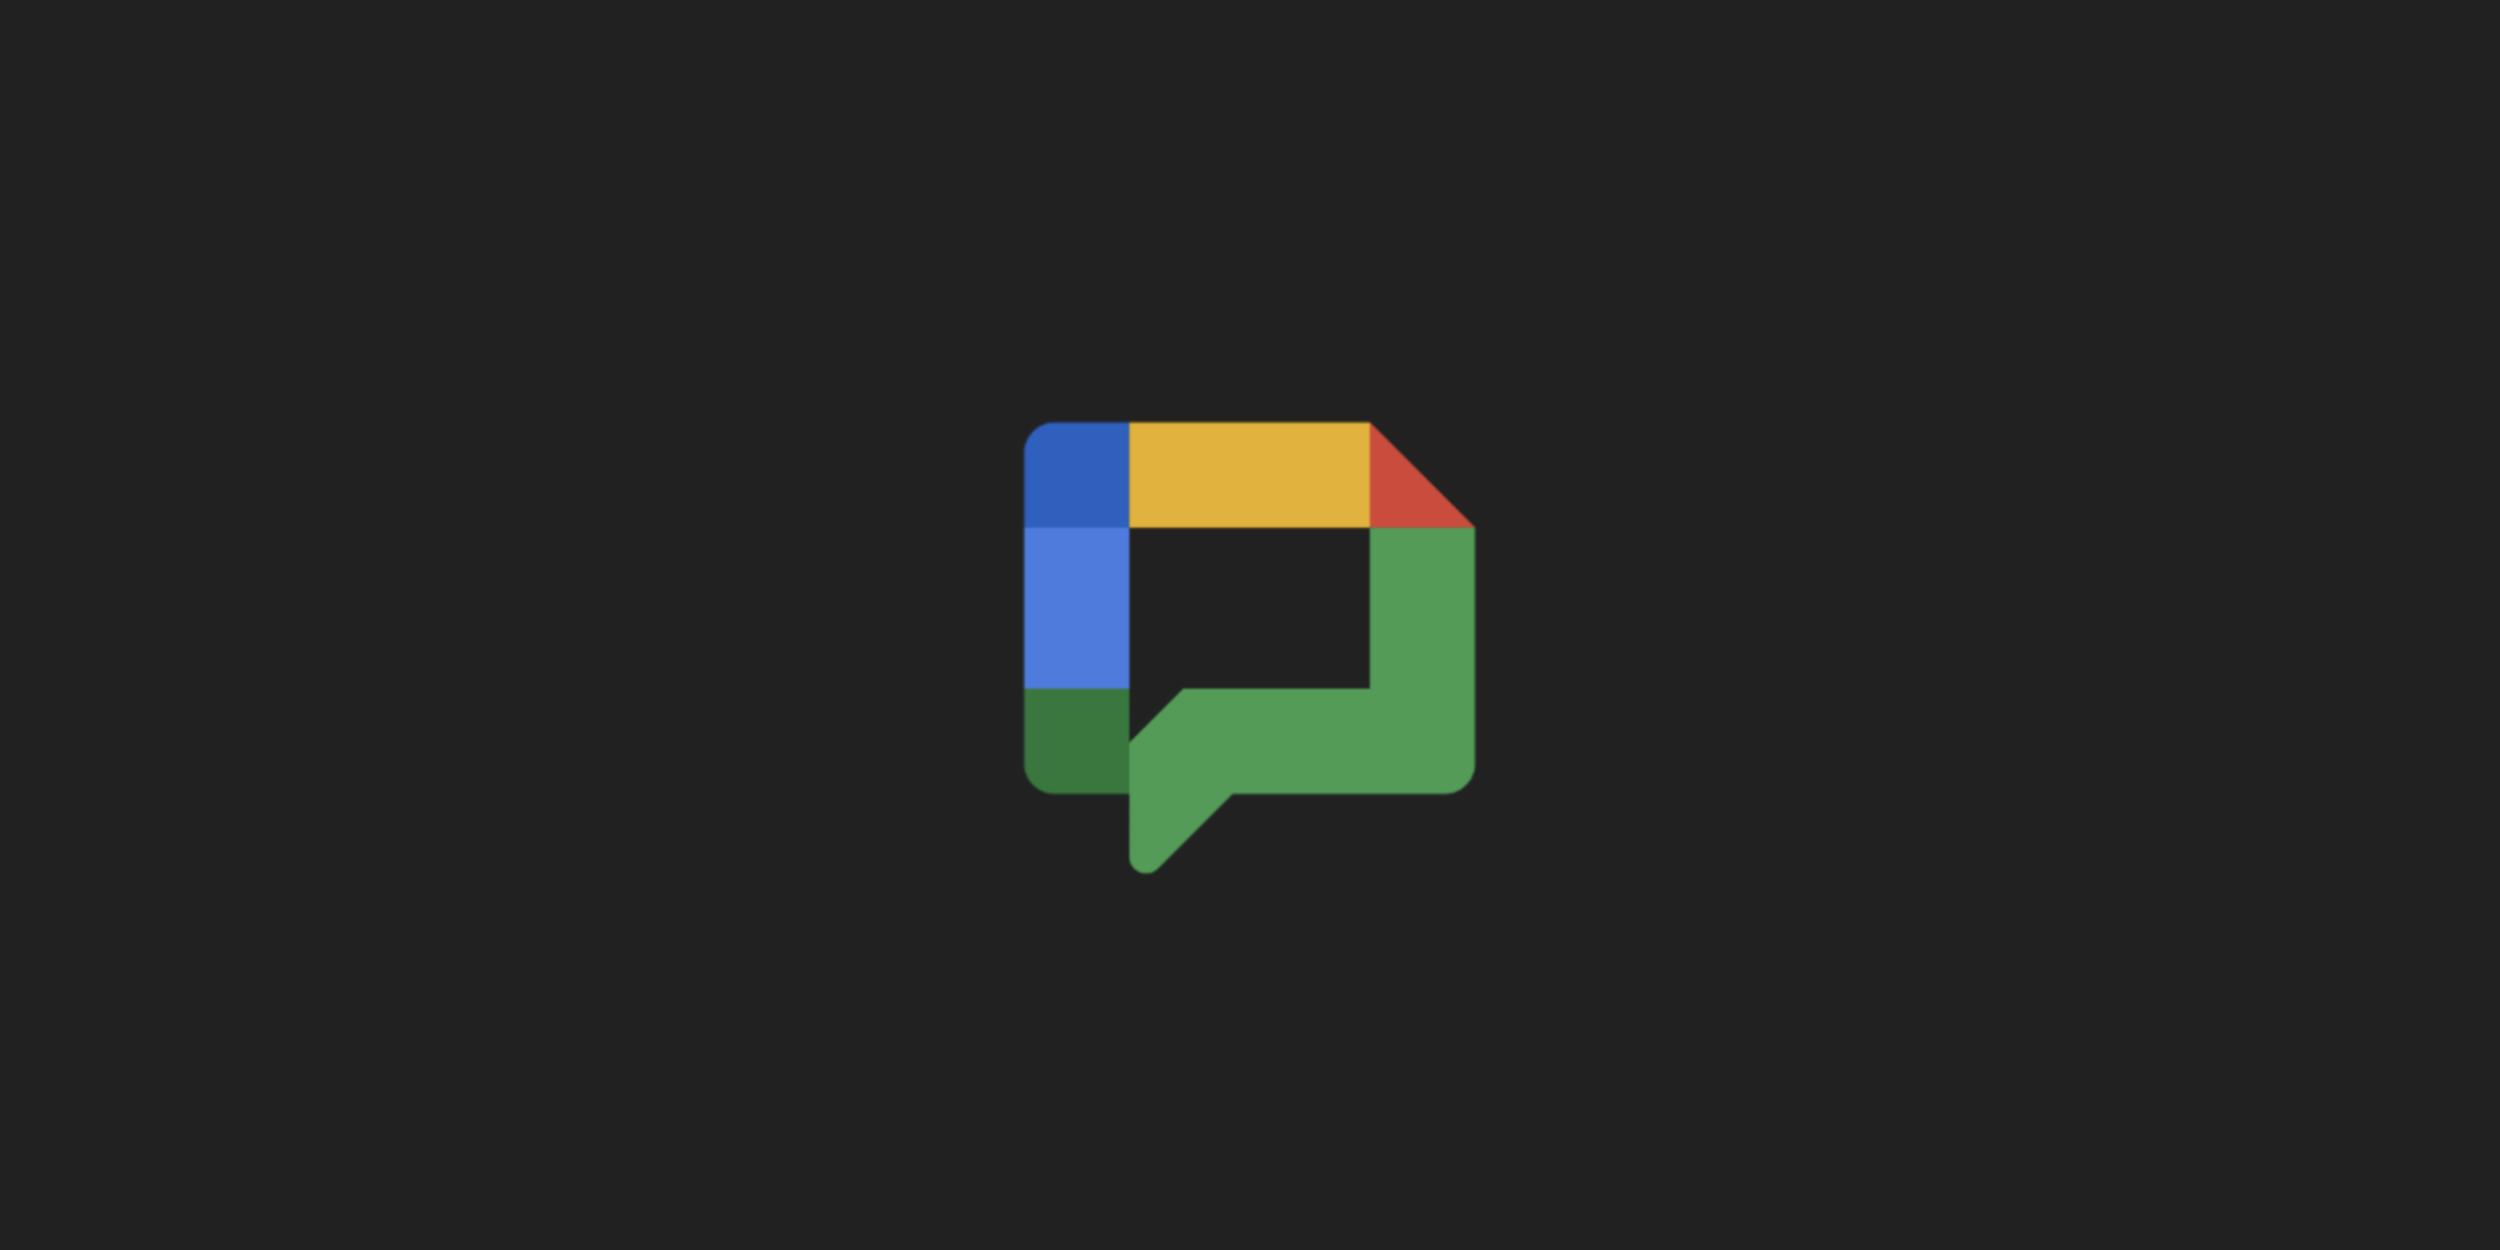 Line chat logo - Social media & Logos Icons